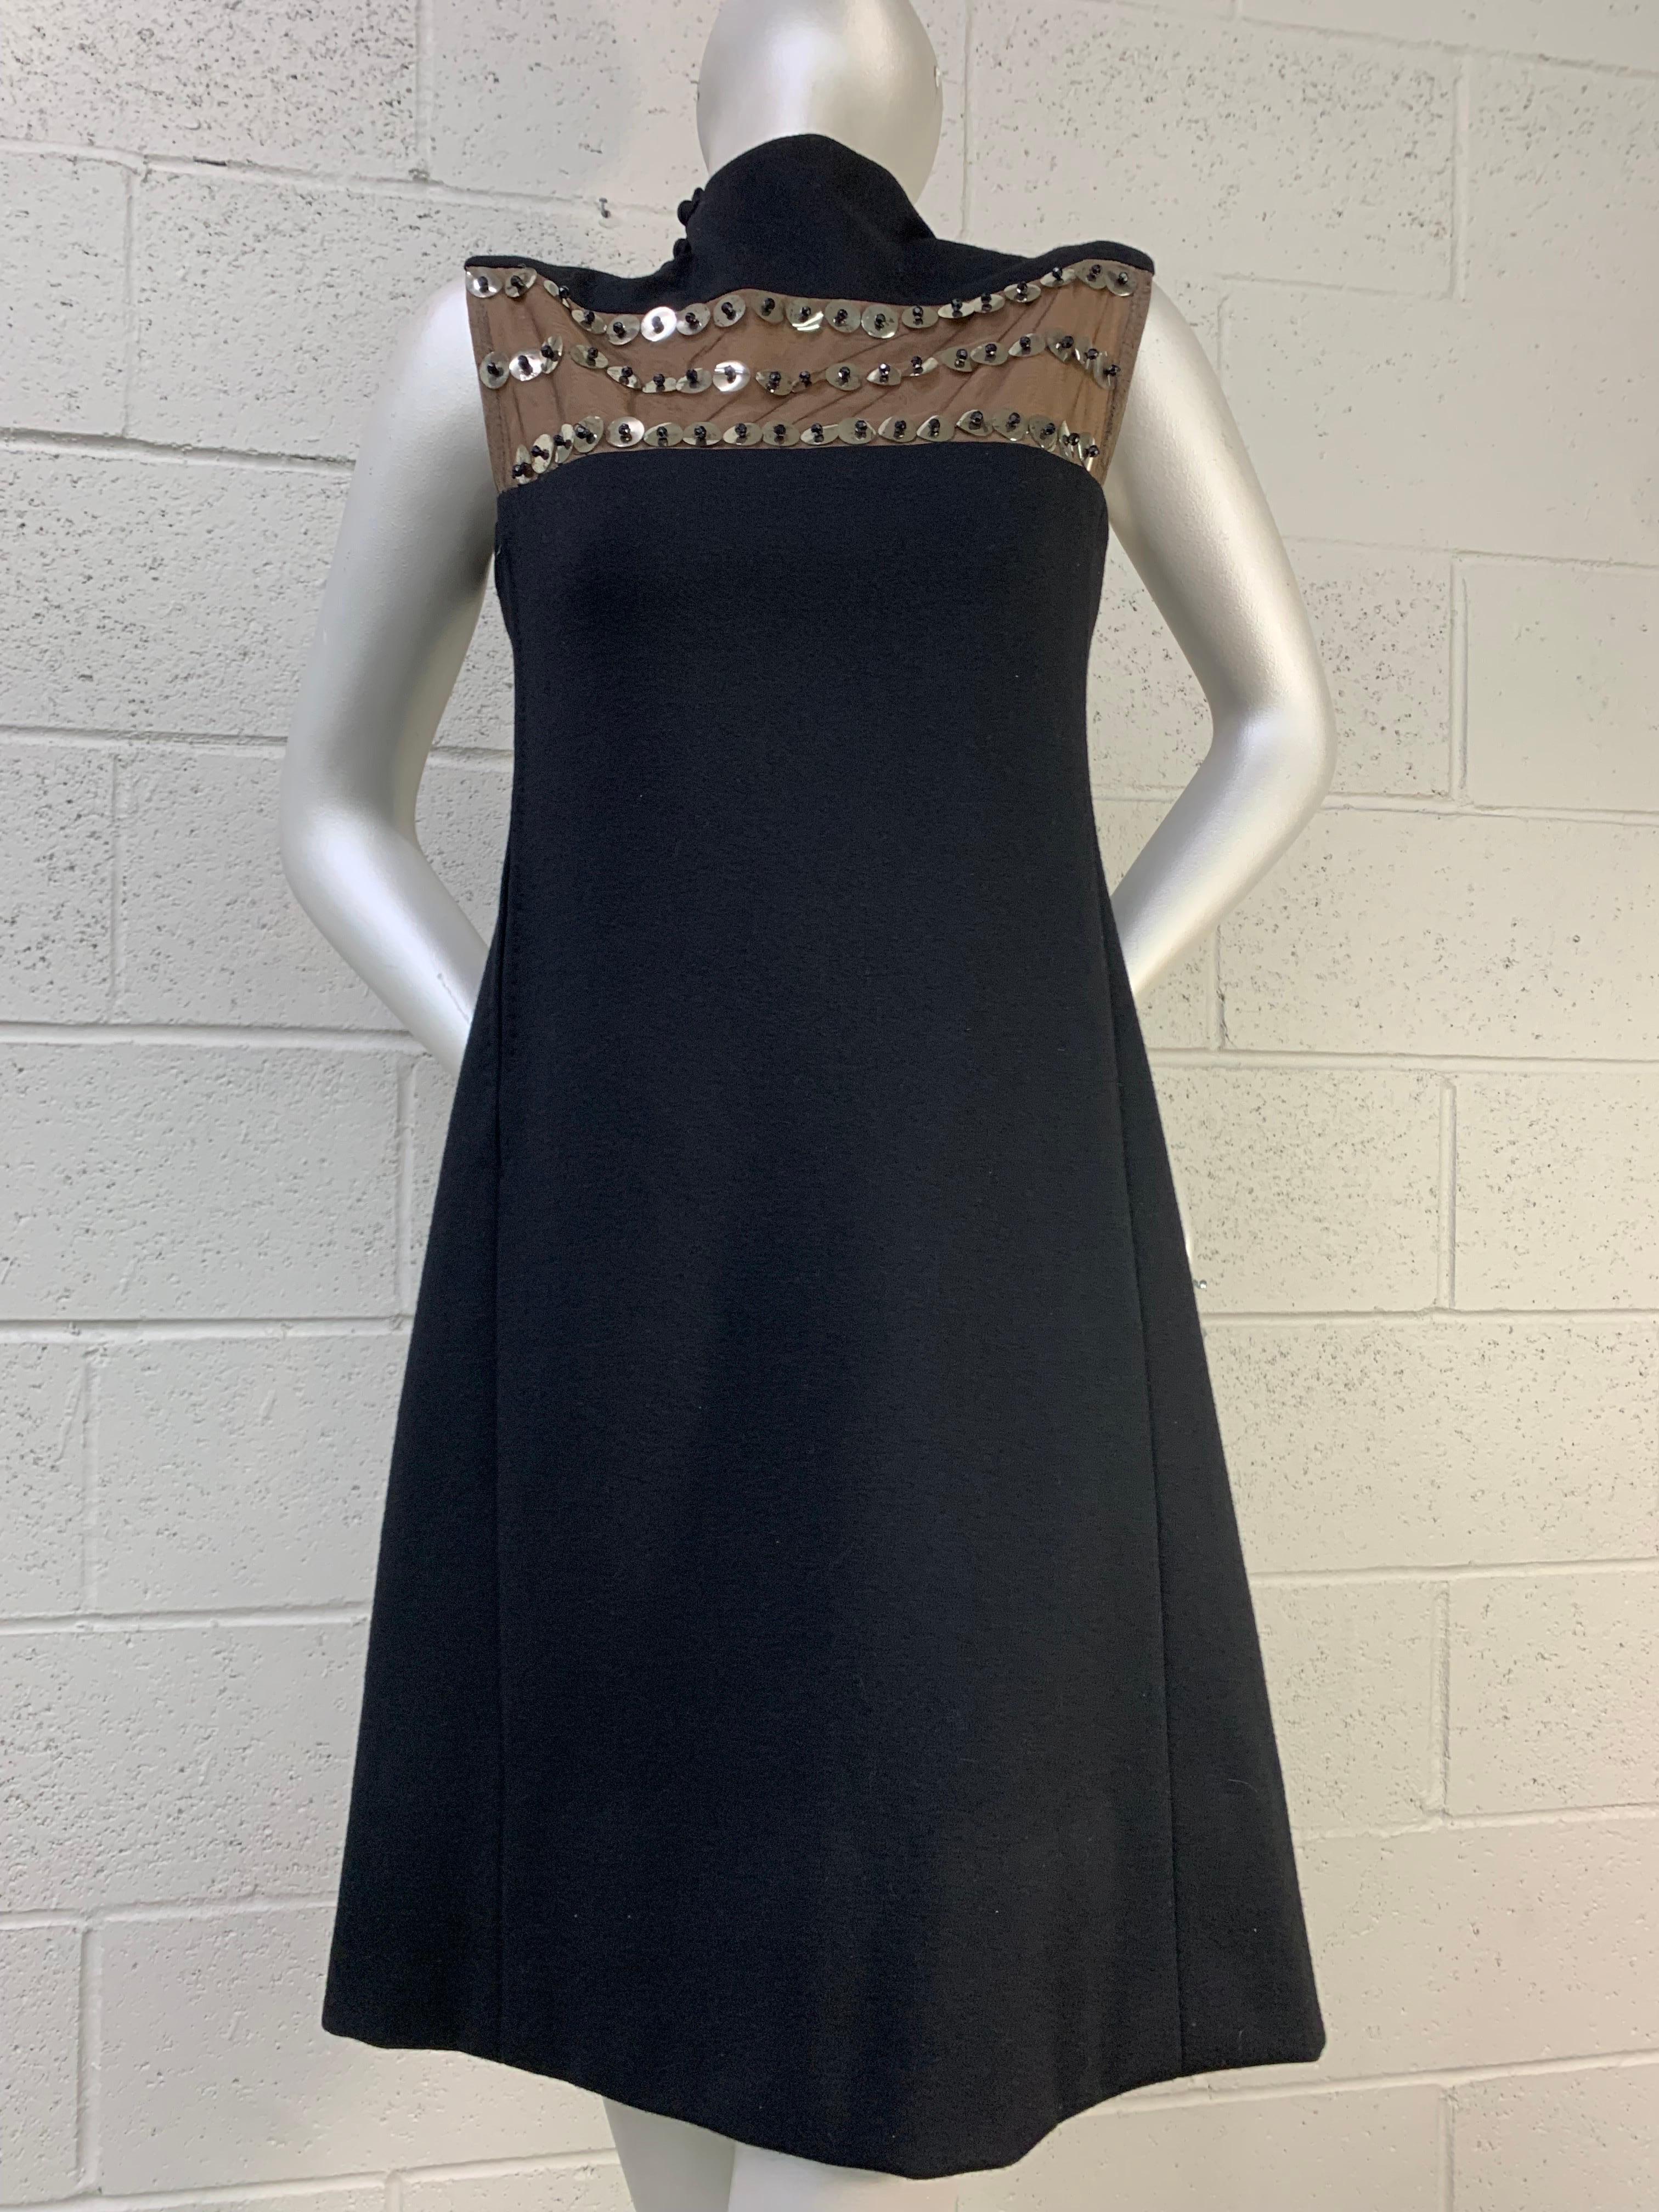 1960 Pauline Trigere Mod Black Wool A-Line Dress w Sheer Paillette Embellishment For Sale 14